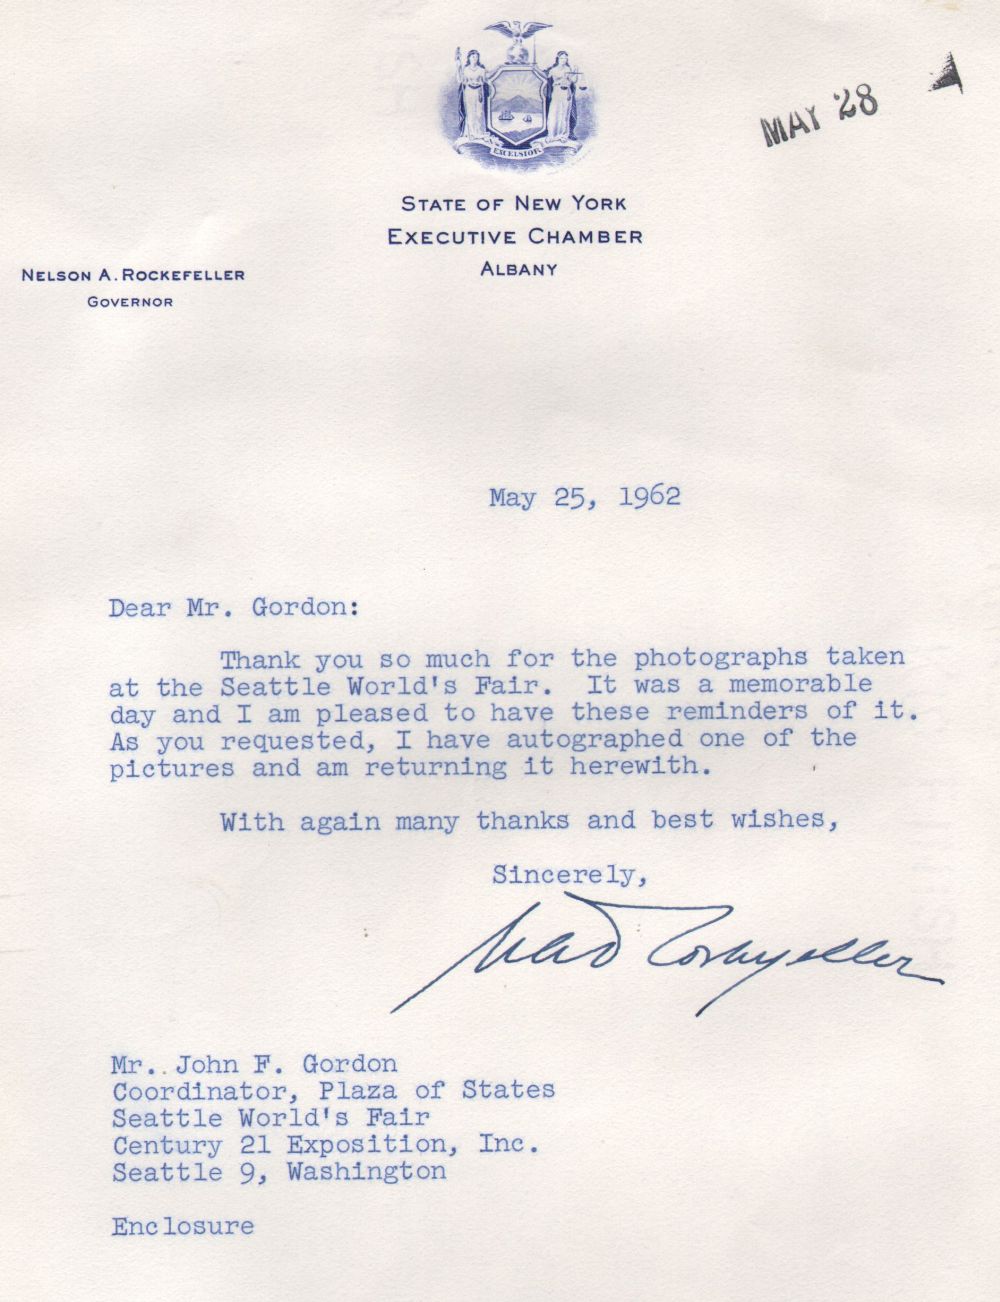 Nice Thank you letter from Nelson Rockefeller to Jack Gordon.